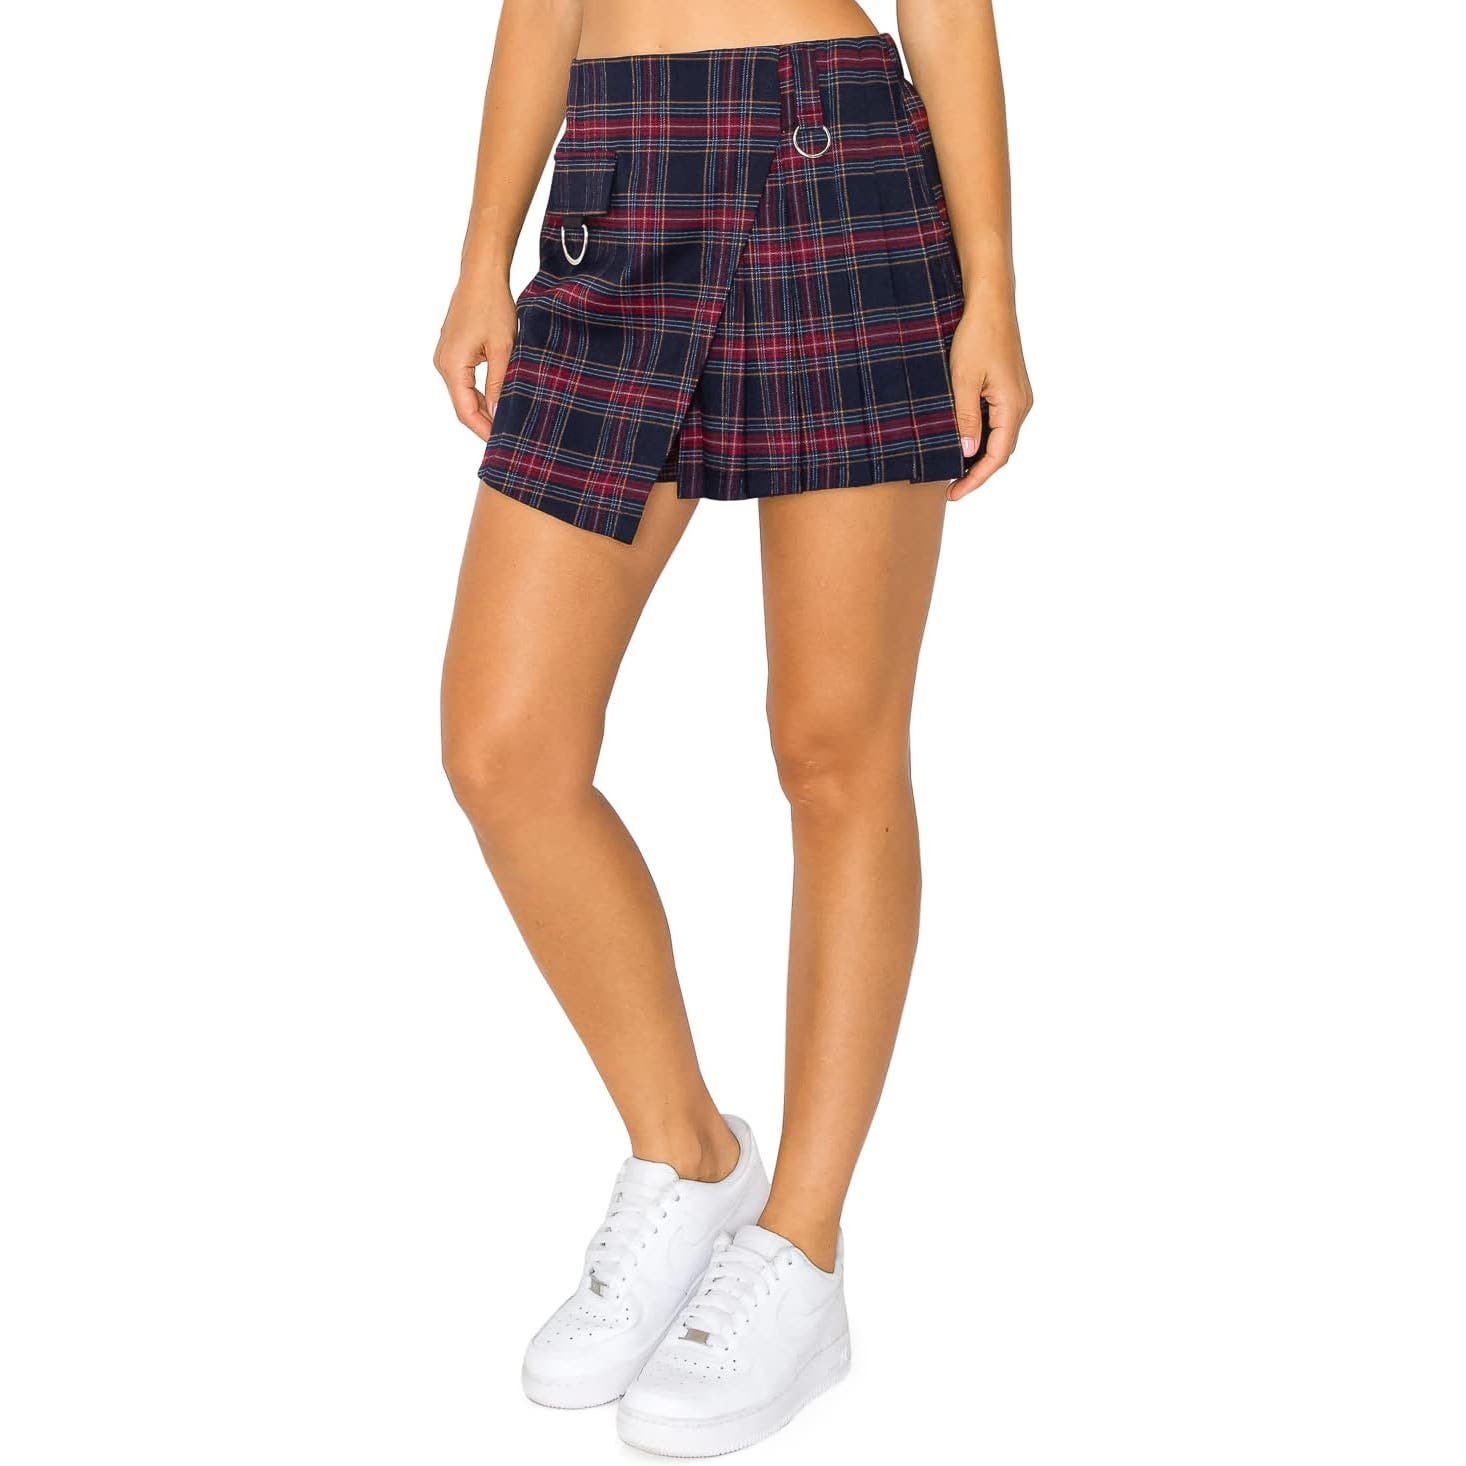 save up to 70% Cali1850 Tartan Plaid Skort Skirt Small 